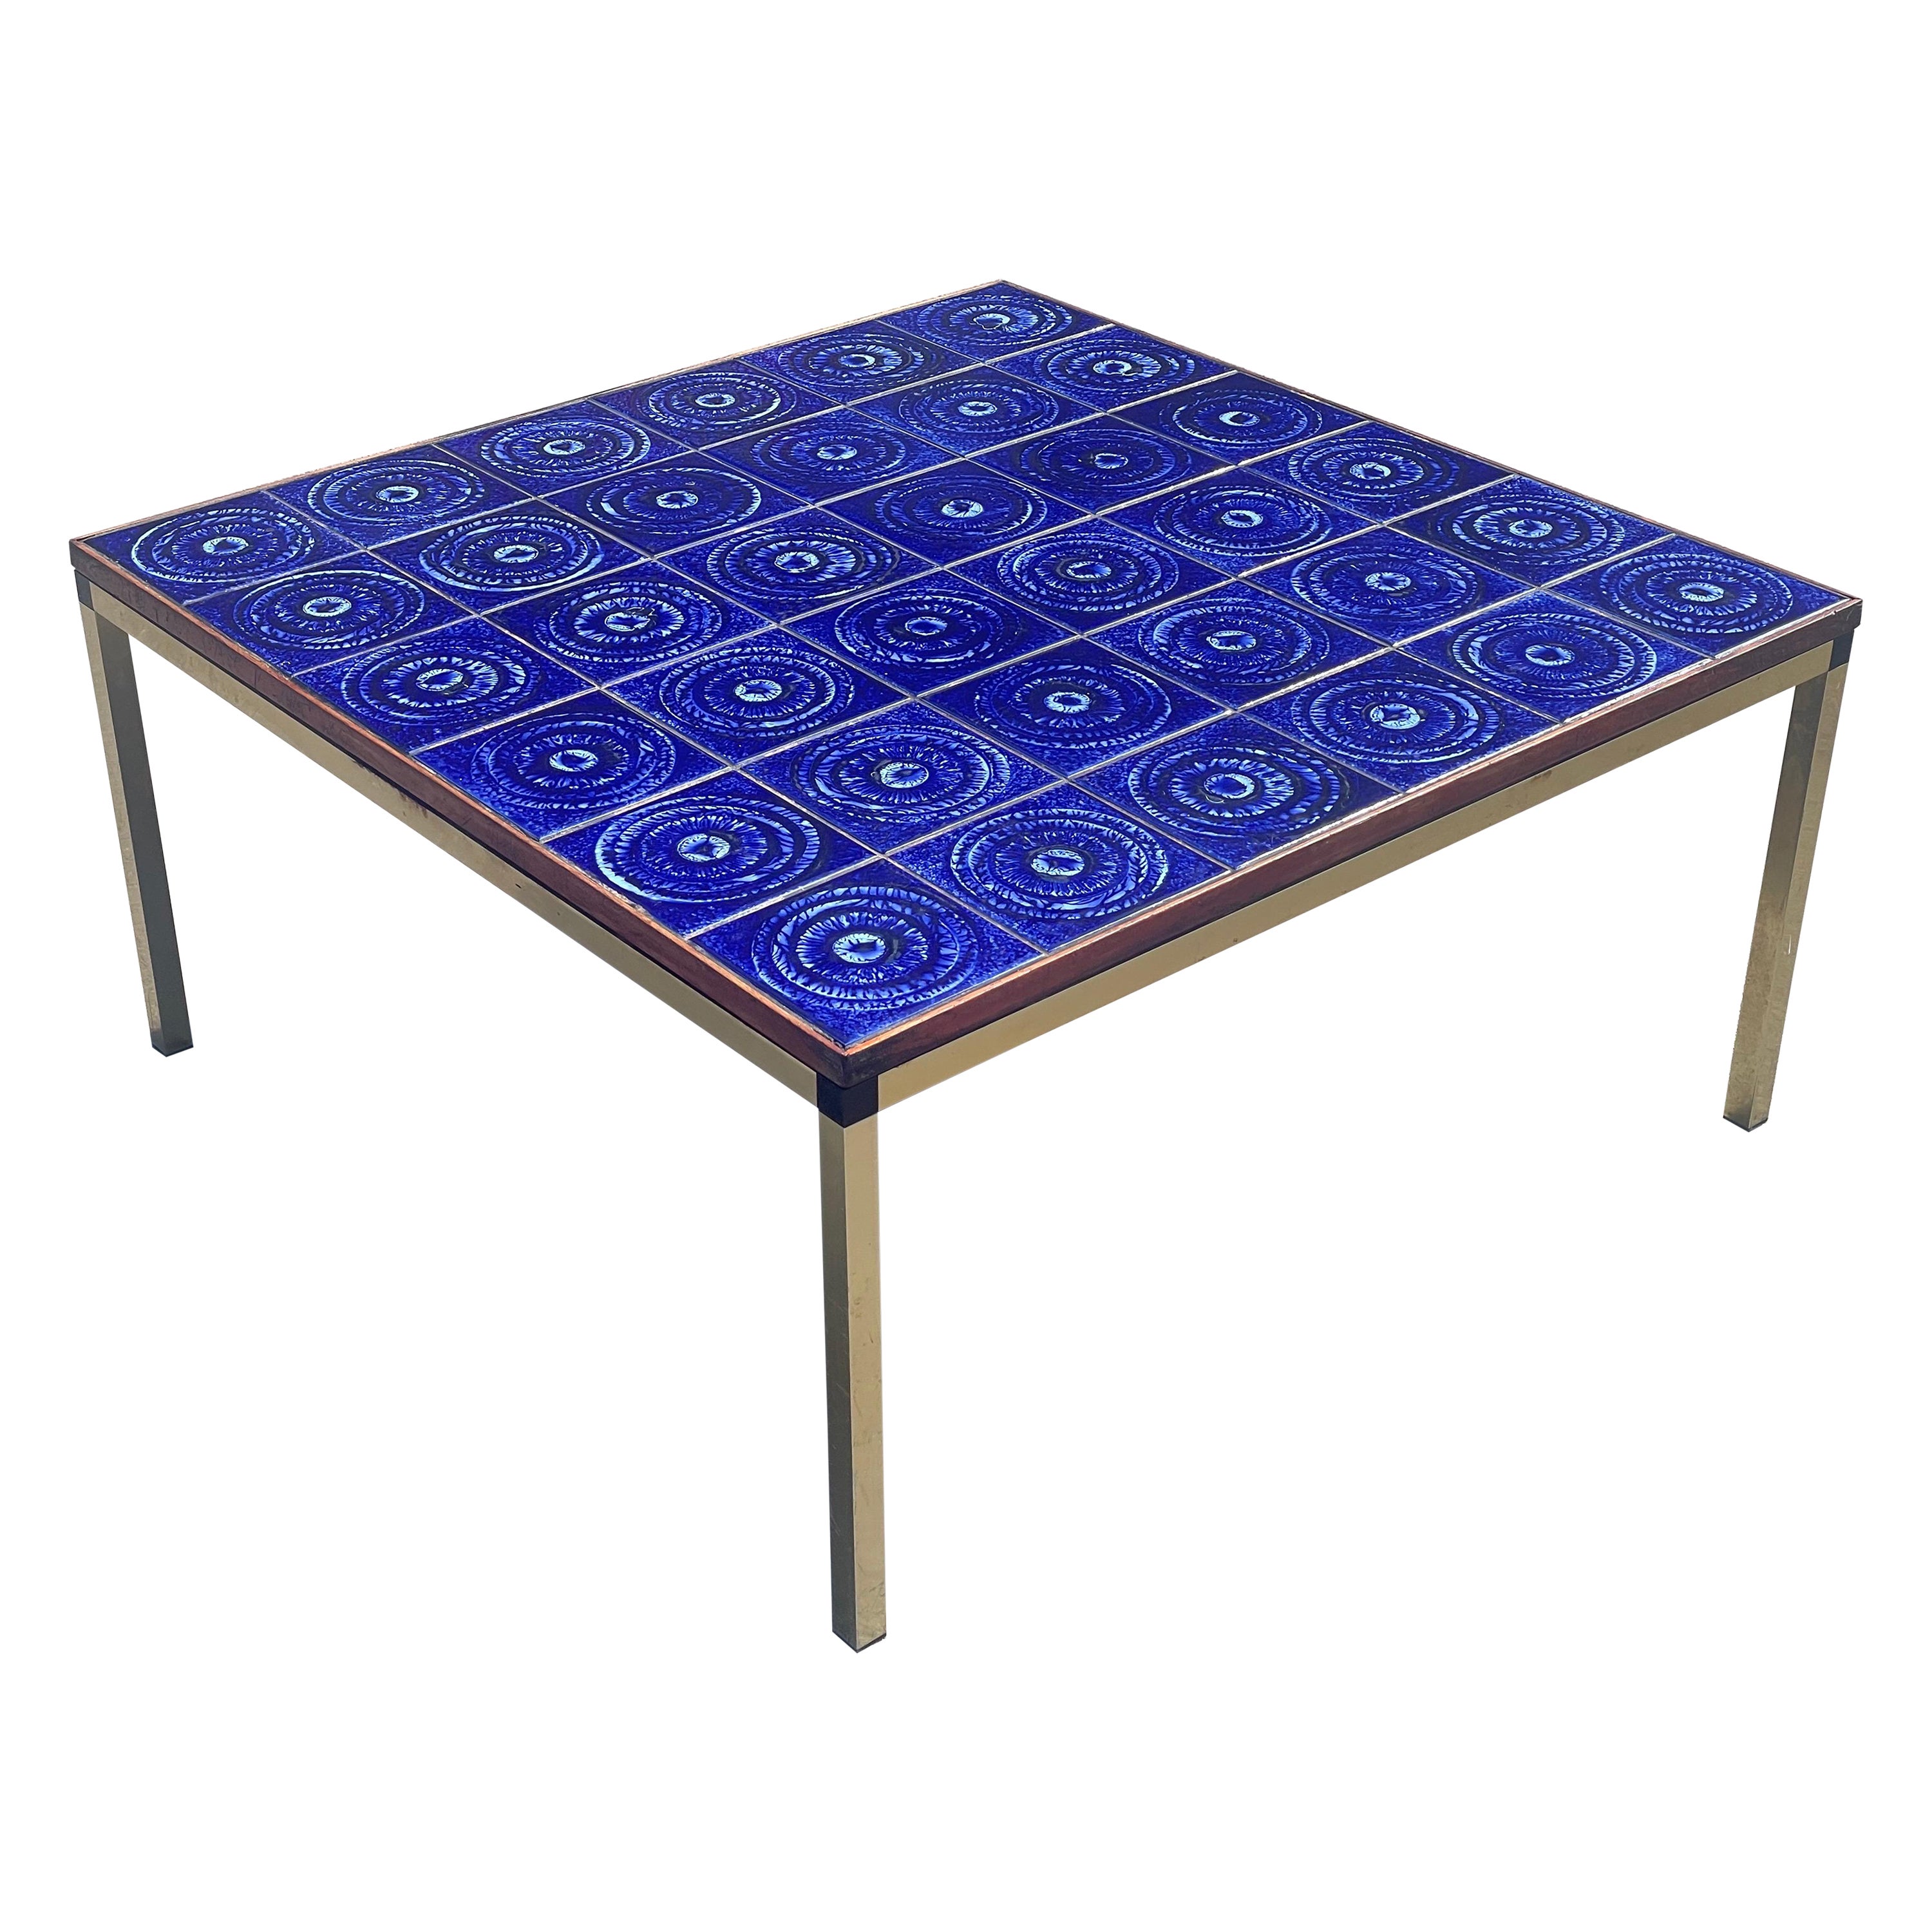 1970´s mid-century modern Danish ceramic table